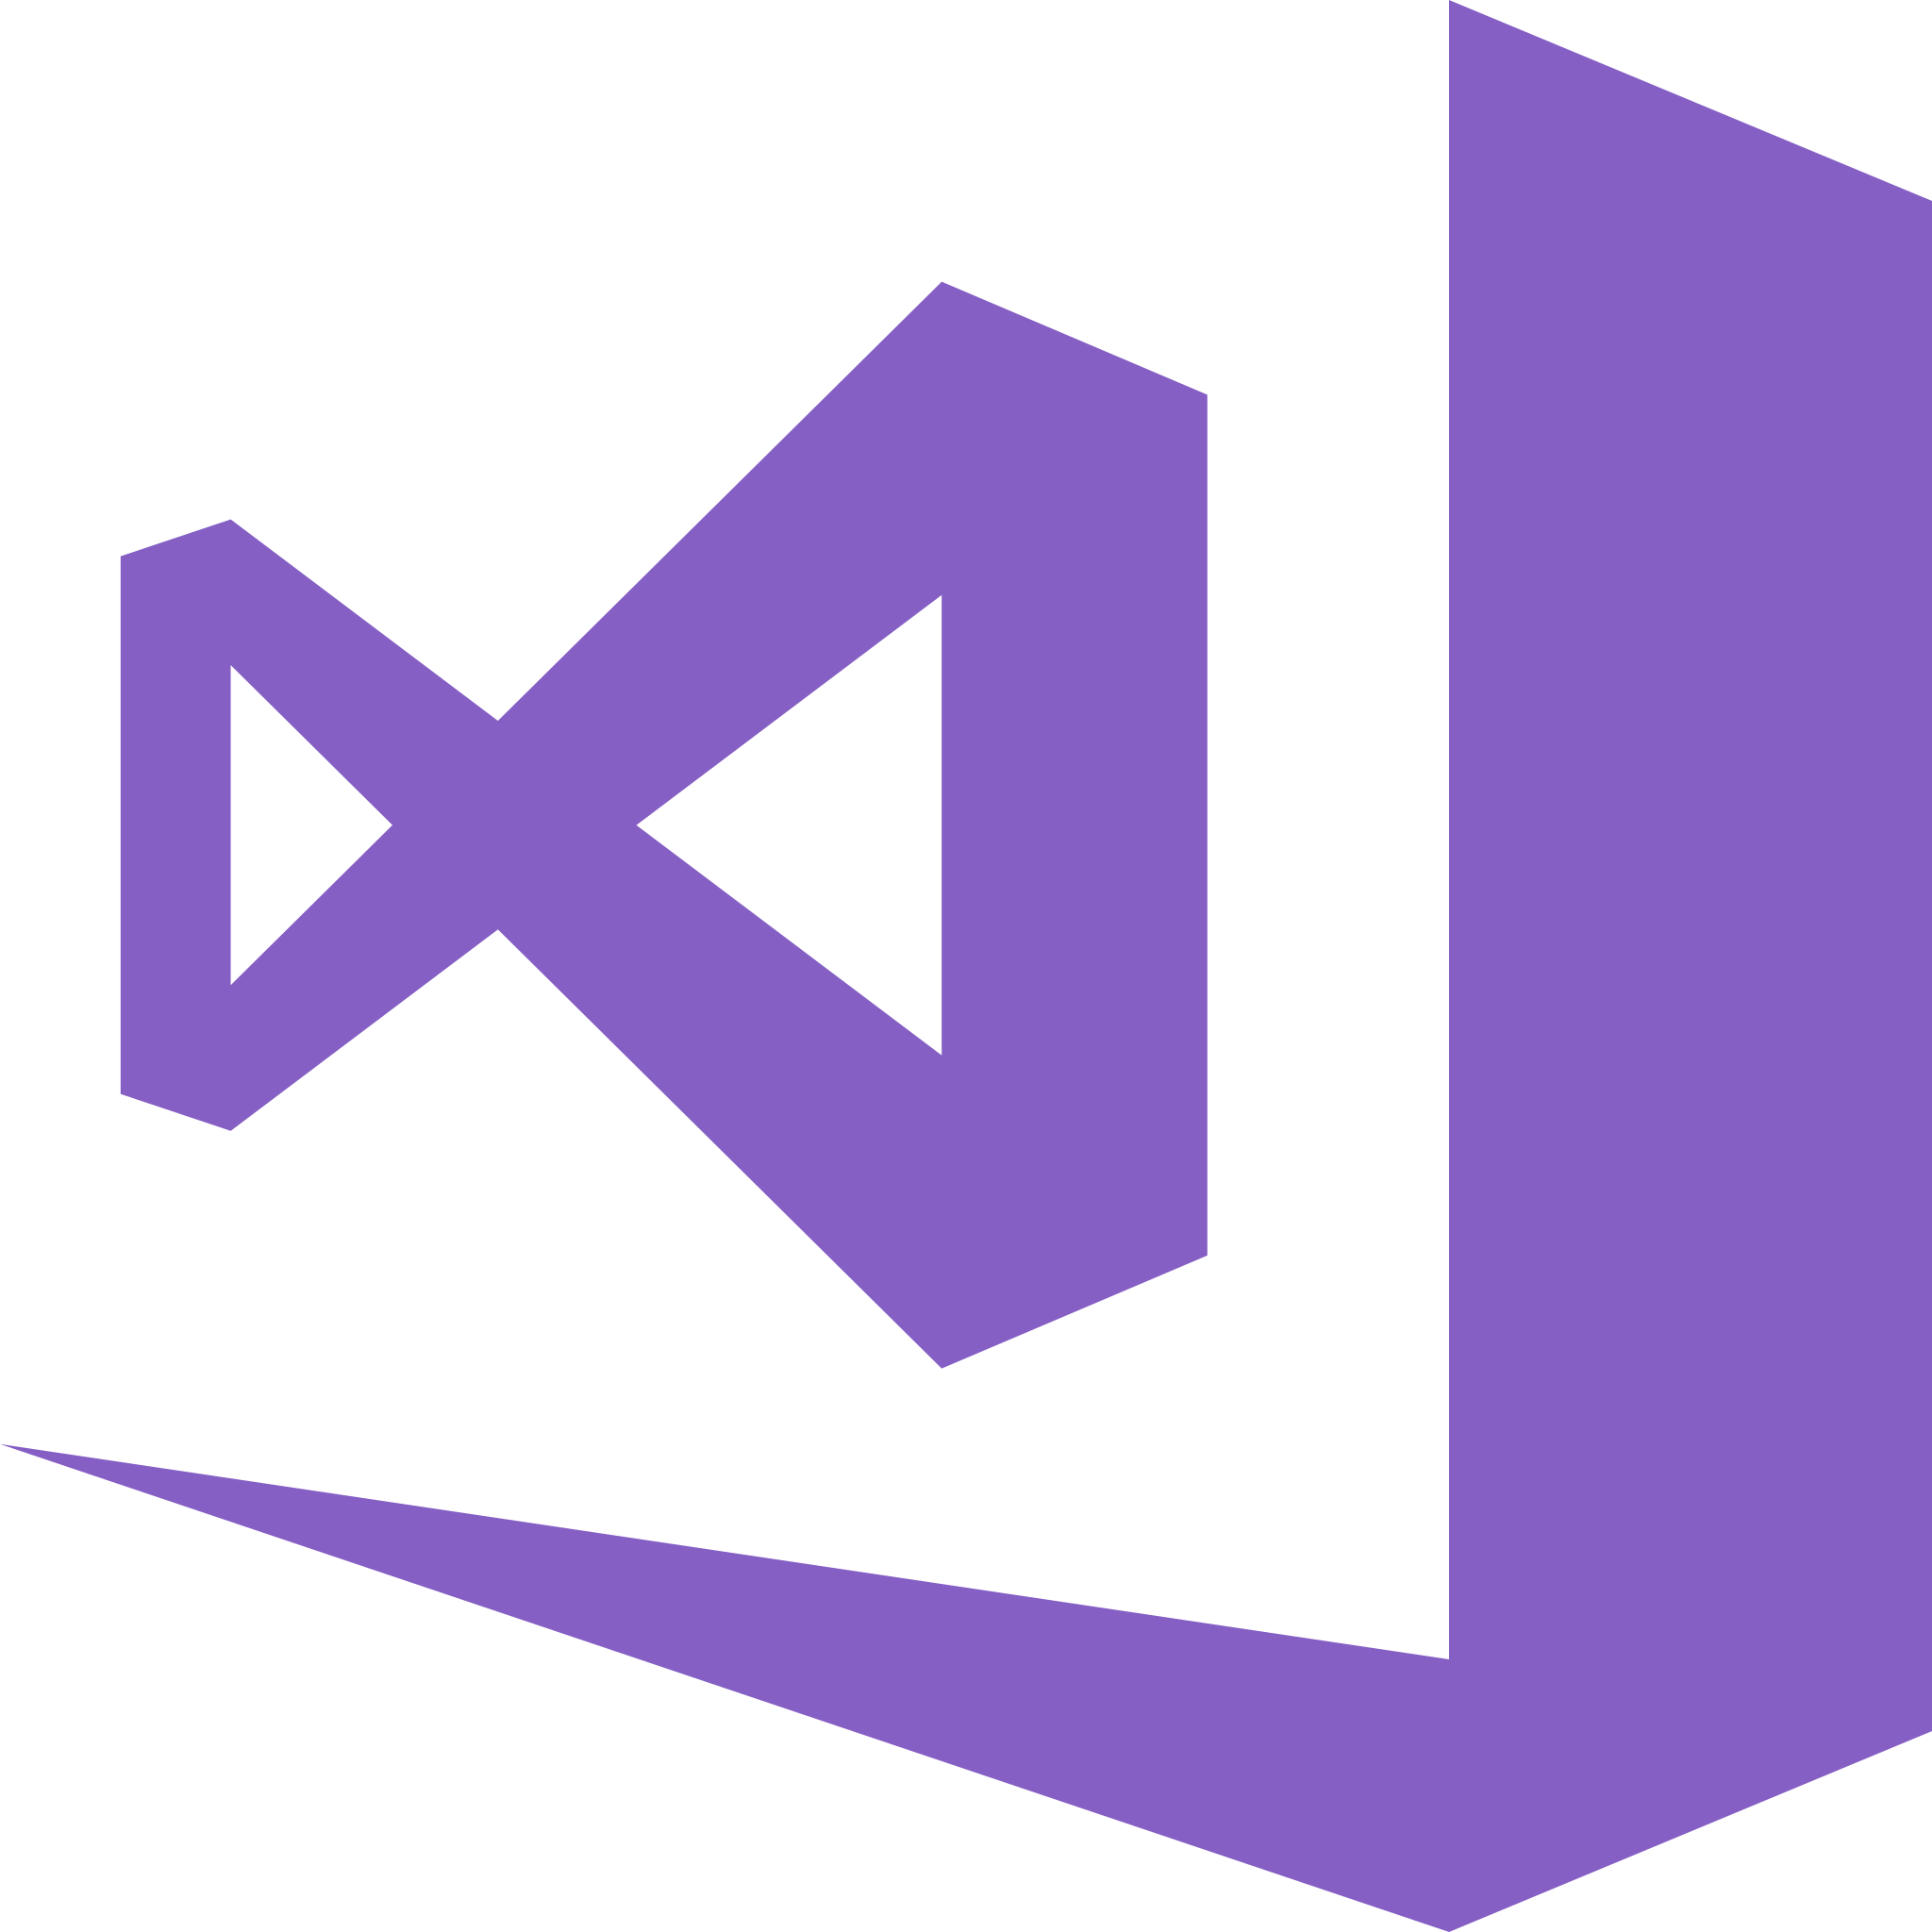 Visual Studio icon or logo